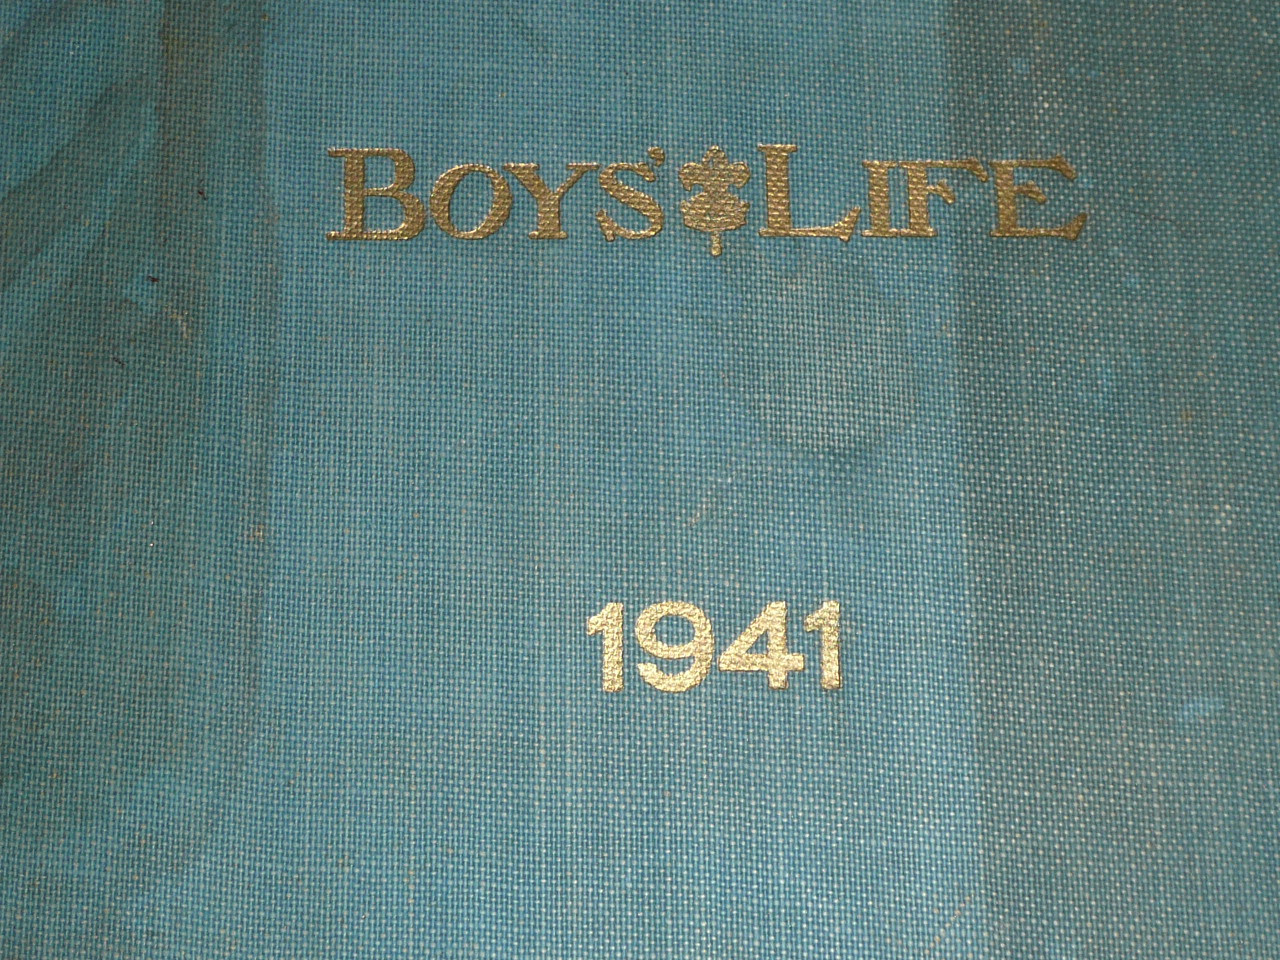 1941, full year bound Boys' Life Magazine, Boy Scouts of America